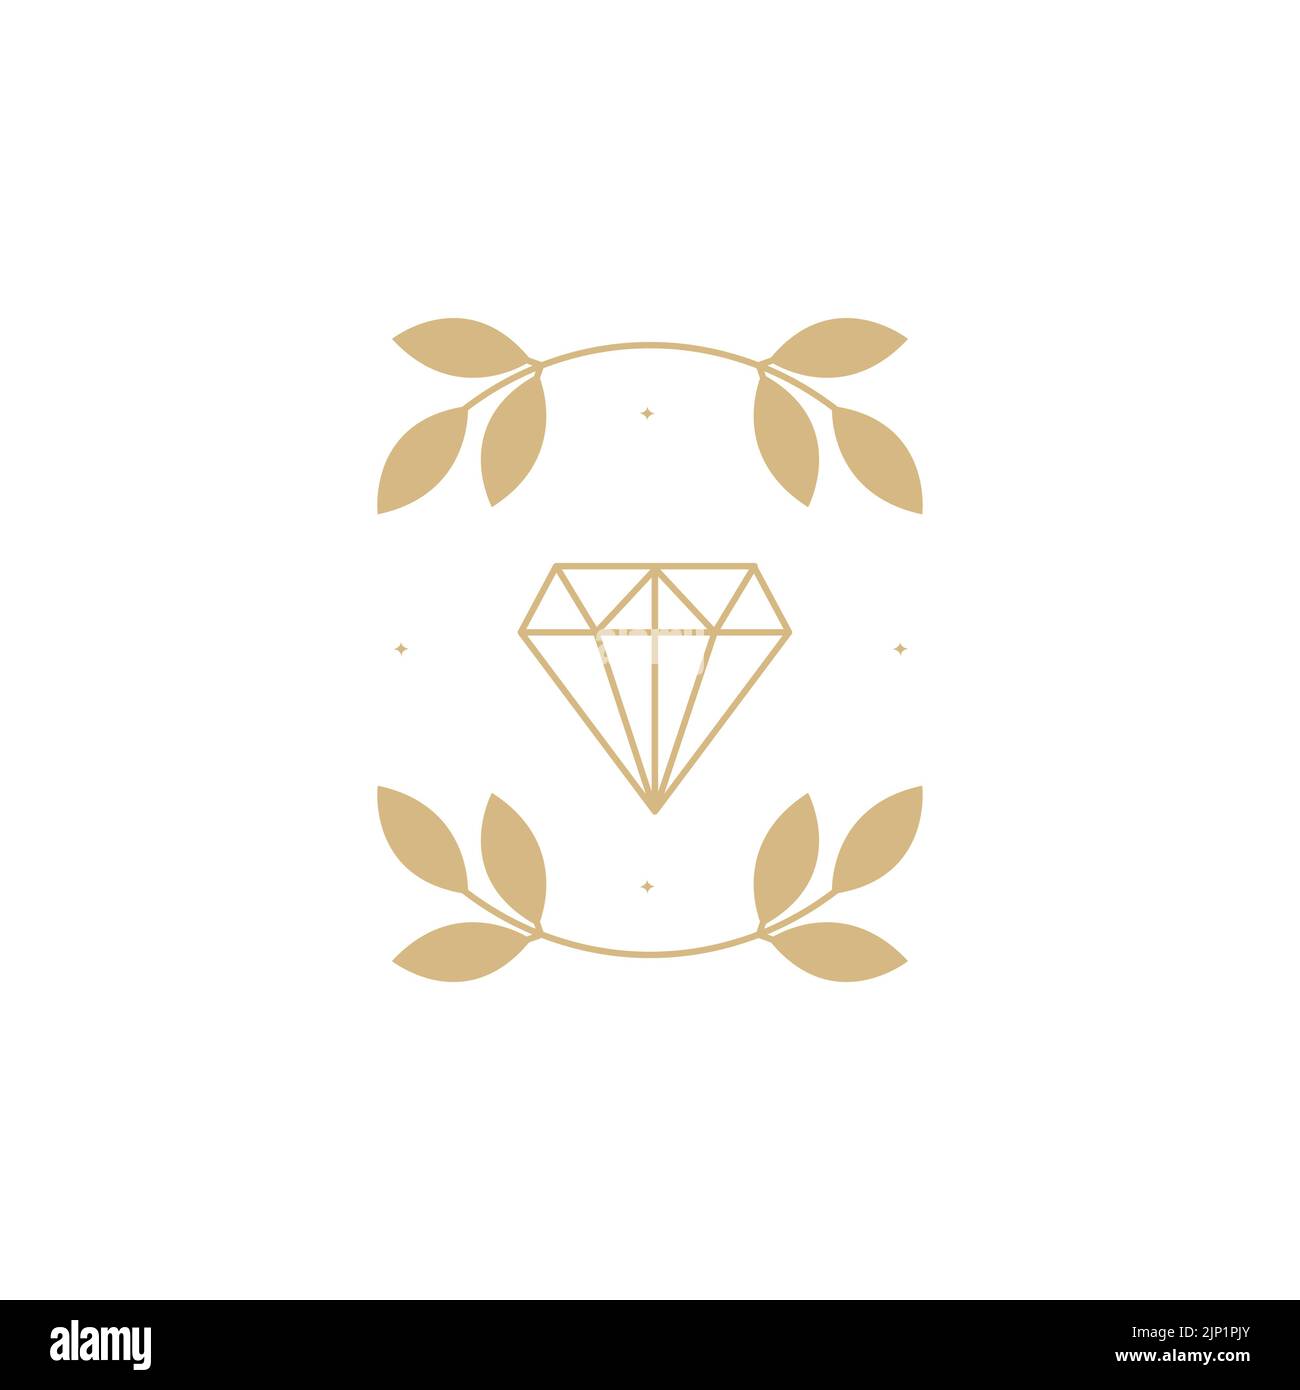 aesthetic diamond and leaves logo design Stock Vector